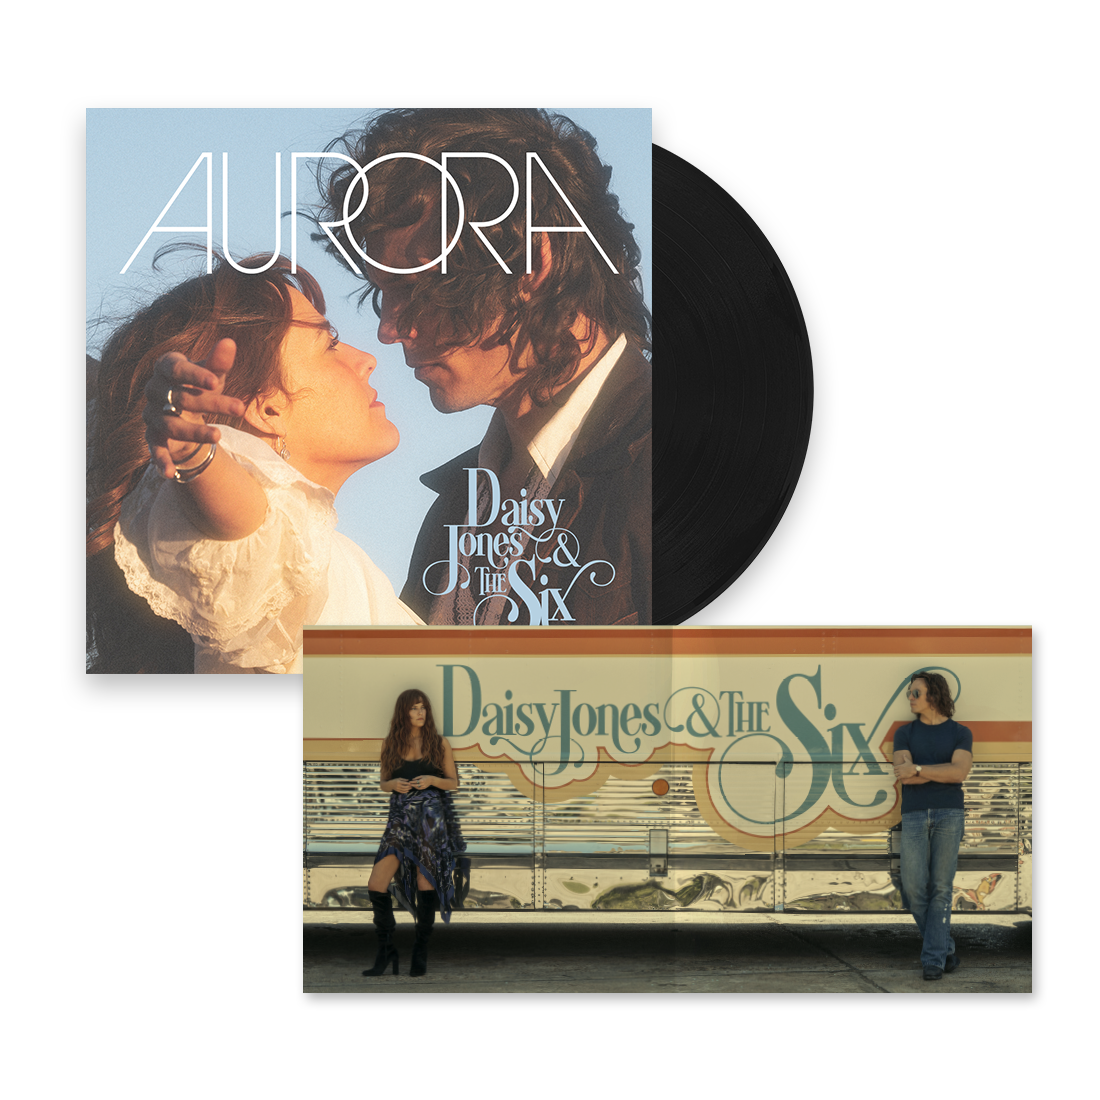 CD Shop - JONES, DAISY & THE SIX AURORA